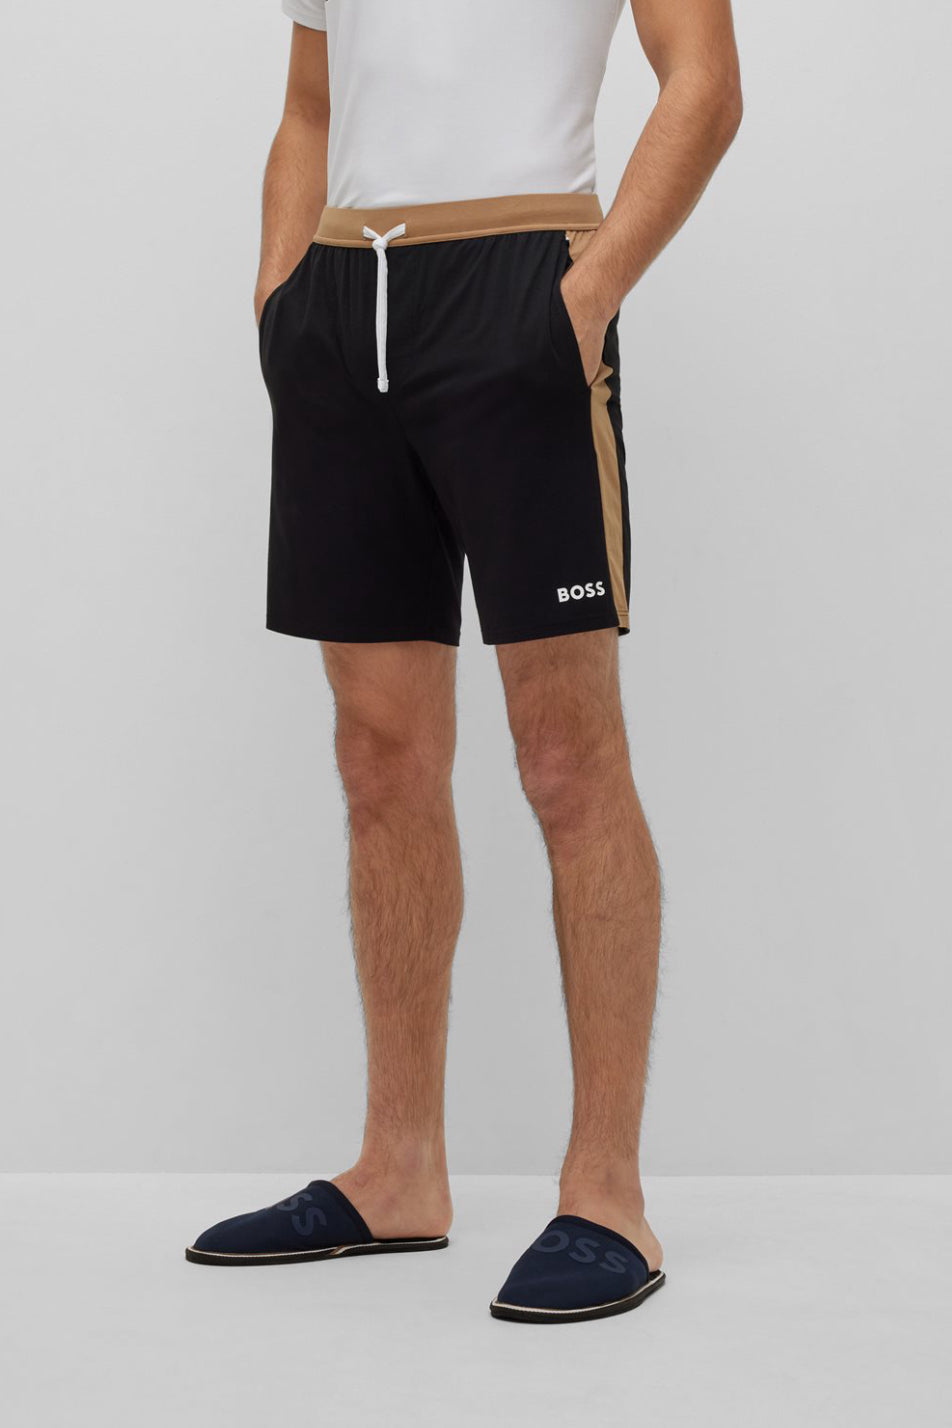 BOSS Men's Balance Shorts